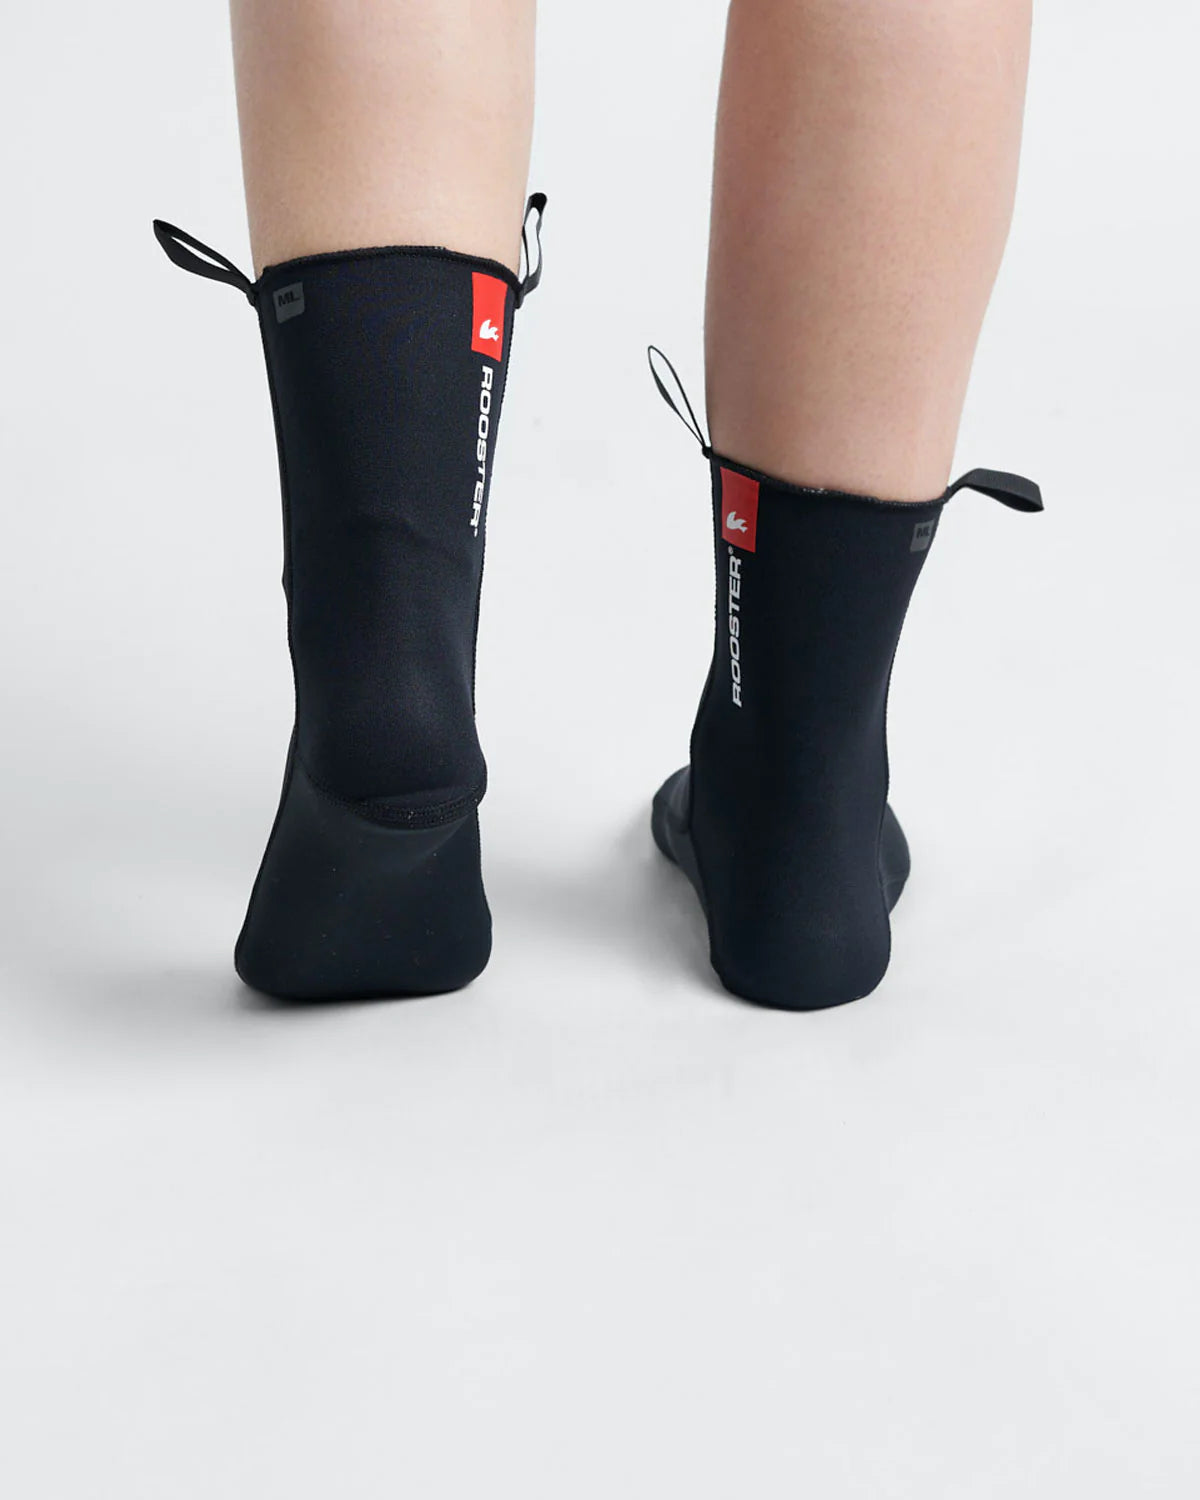 Calzino Rooster Hot Socks 0.5mm